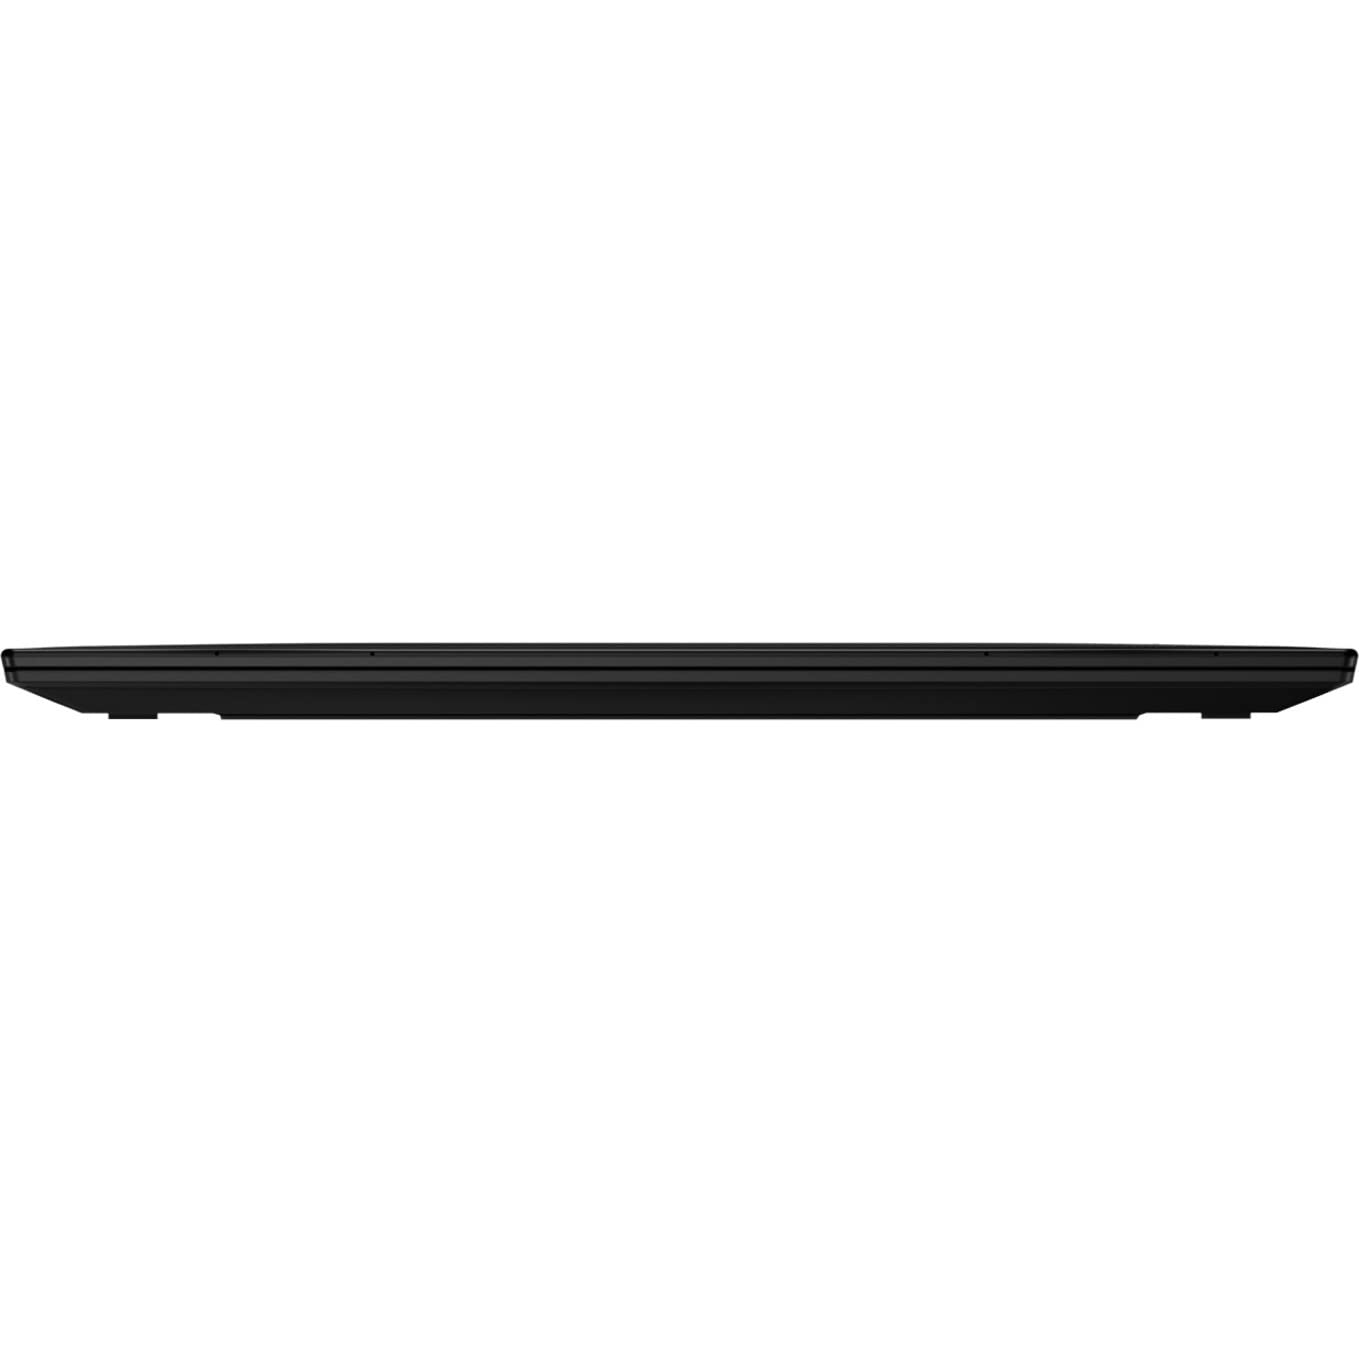 Lenovo ThinkPad X1 Carbon Gen 9 20XW00ERUS 14